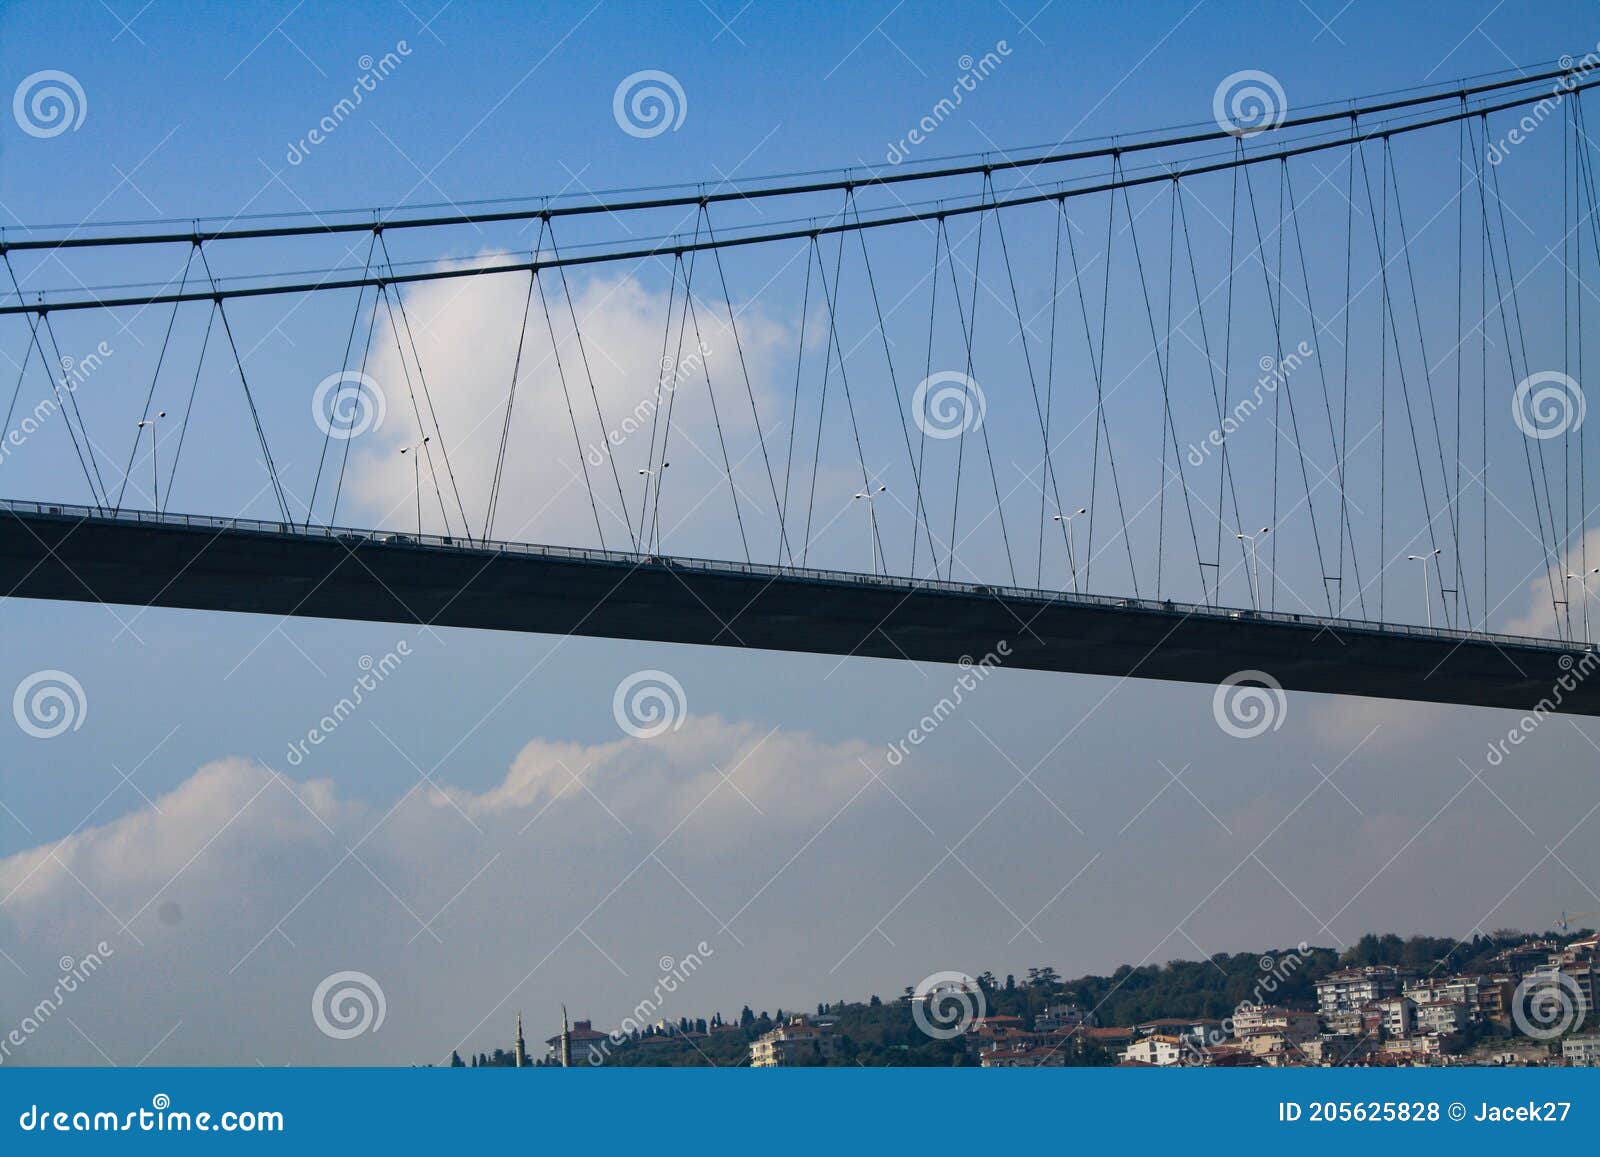 bosphorus bridge also: i bosforski bridge, tur. boÃÅ¸az kÃÂ¶prÃÂ¼sÃÂ¼ - road bridge over the bosphorus strait in turkey